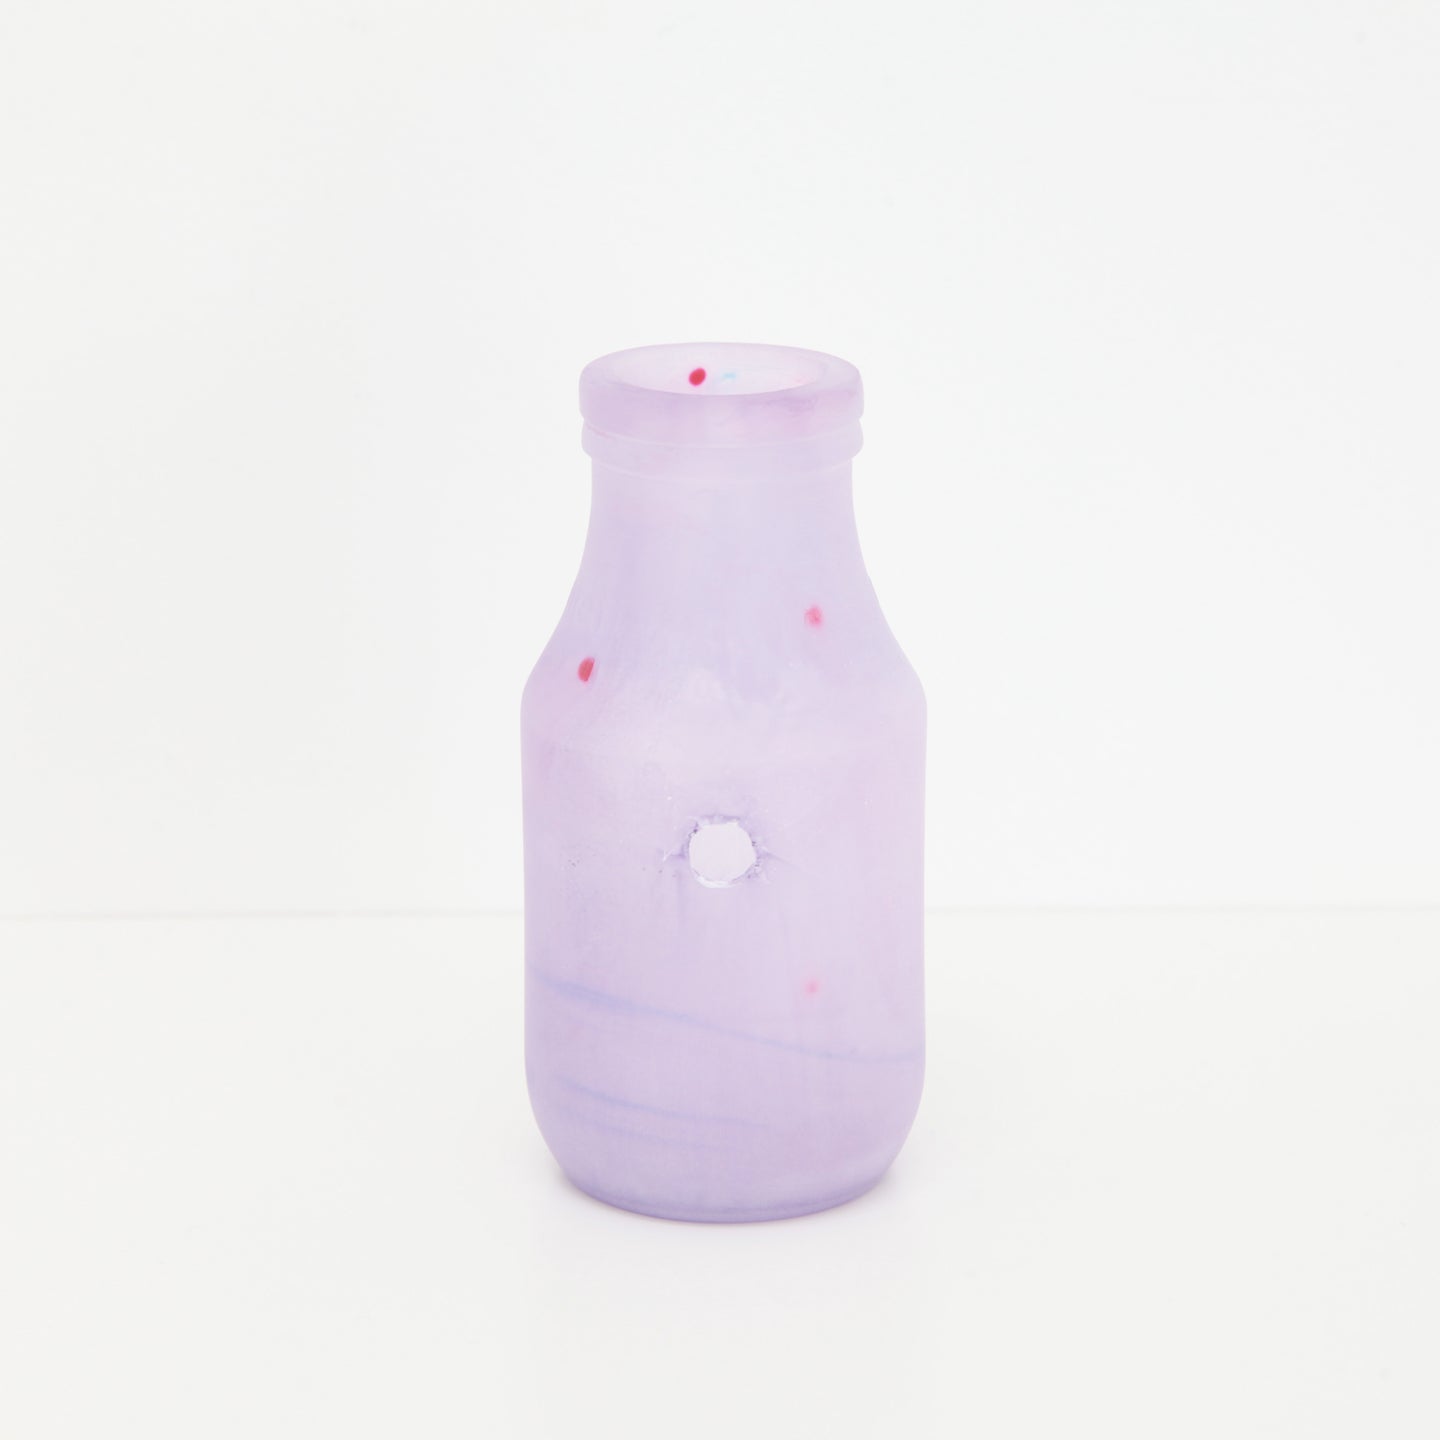 Milk Bottle 